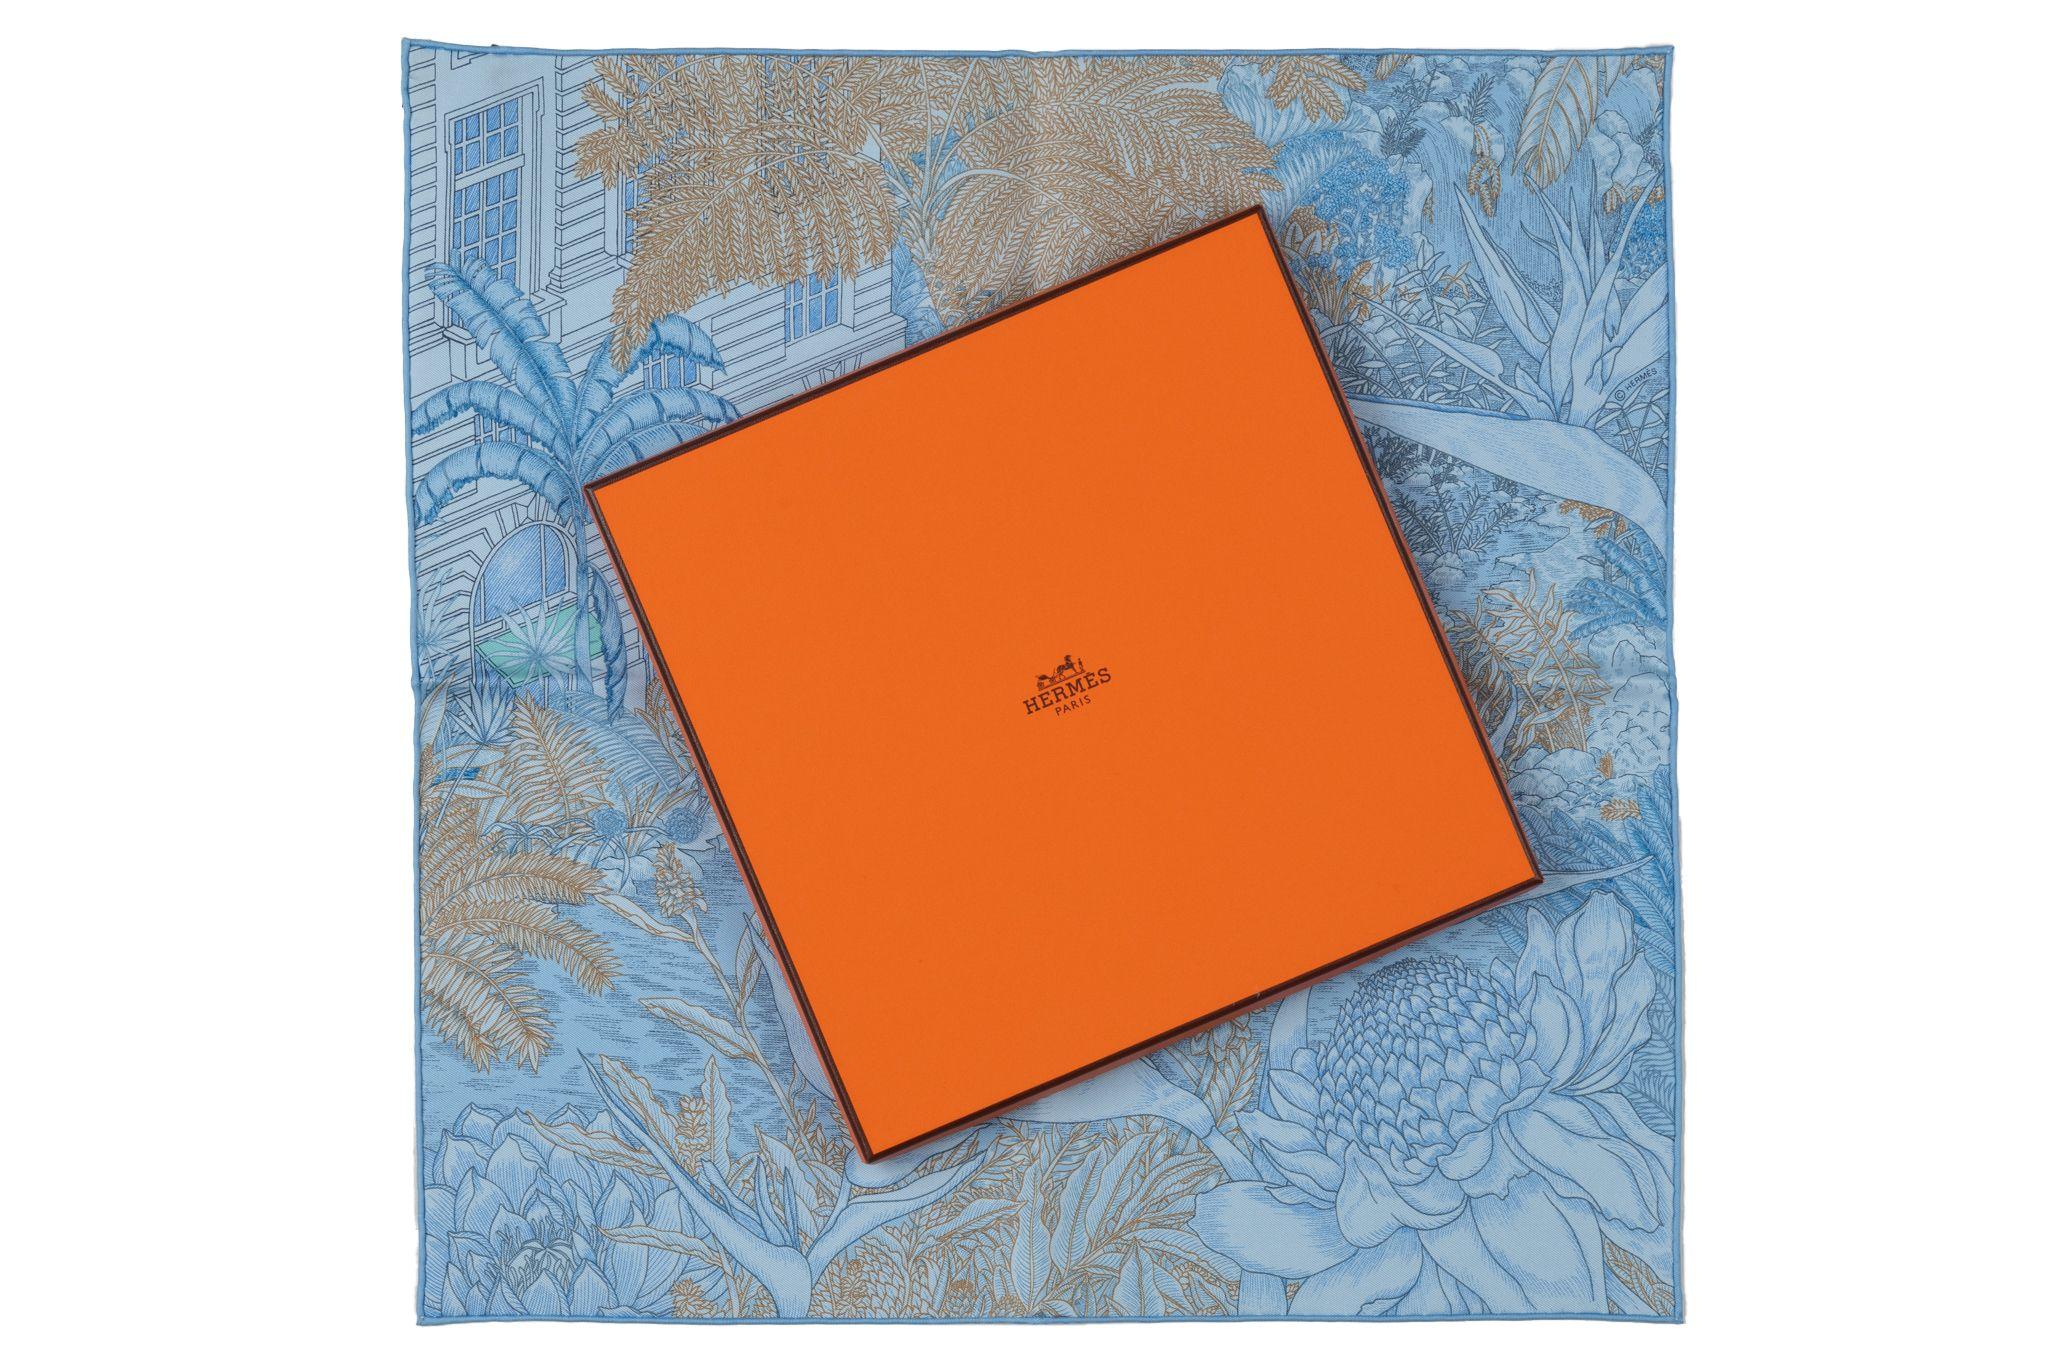 Hermès brand new in box tropical garden blue silk gavroche. Bords roulés à la main.